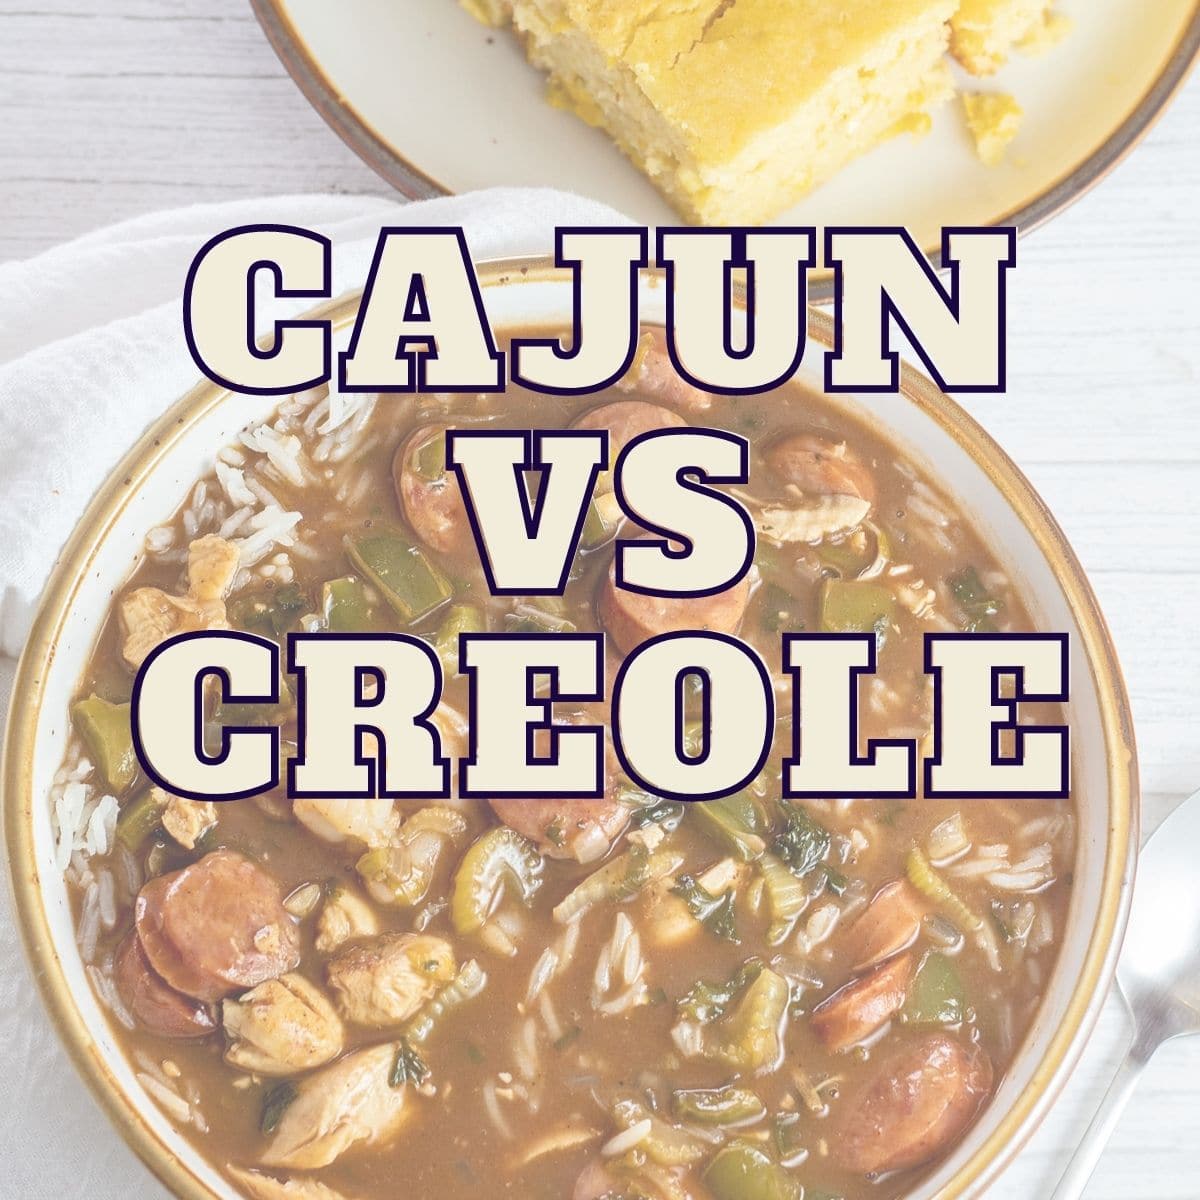 Cajun vs Creole cuisine text title over gumbo image.